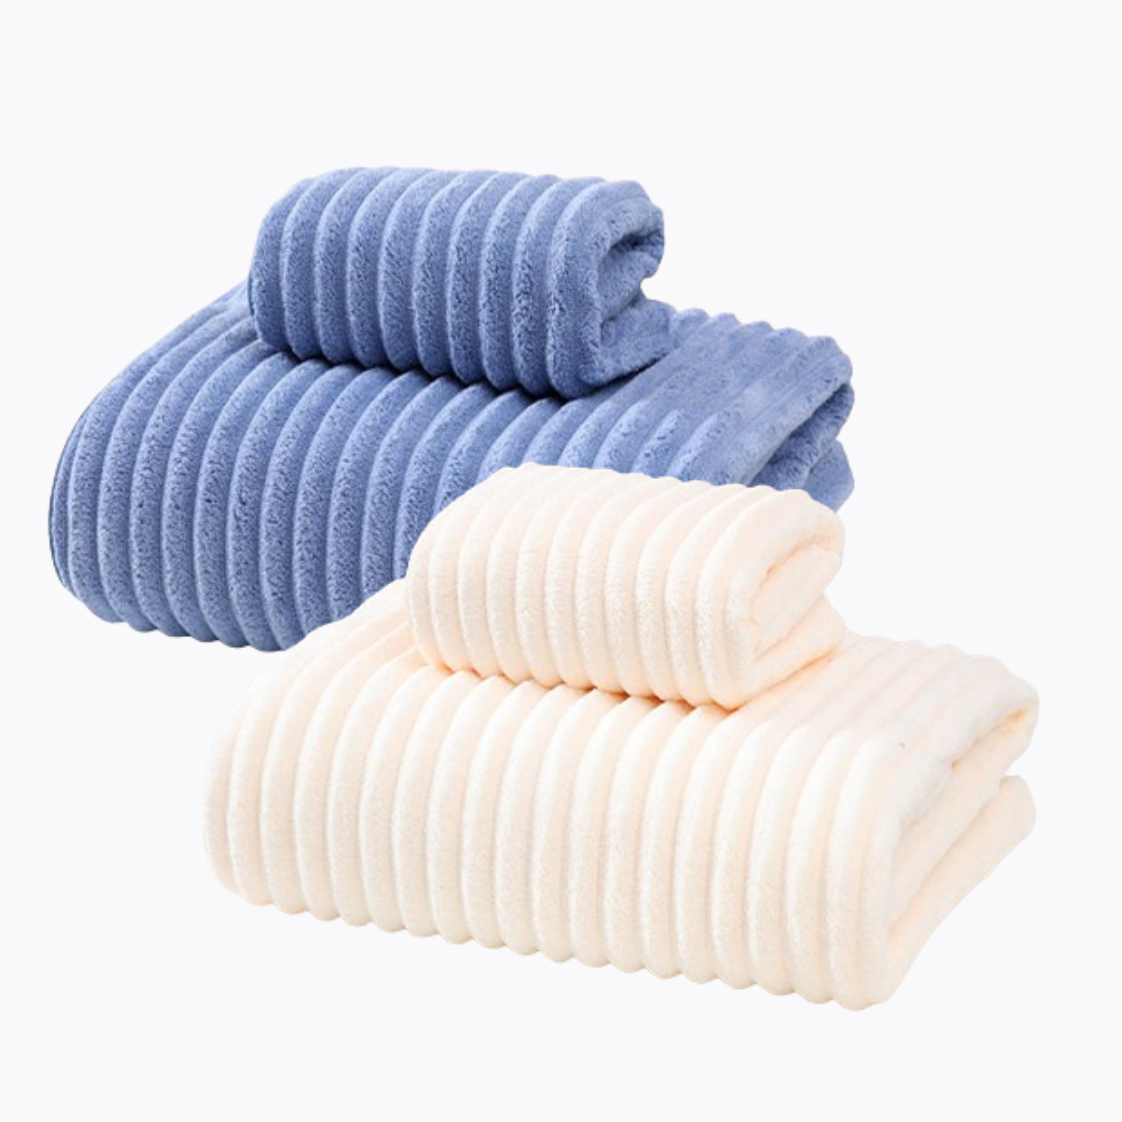 The Marshmallow Towel Partner Pack